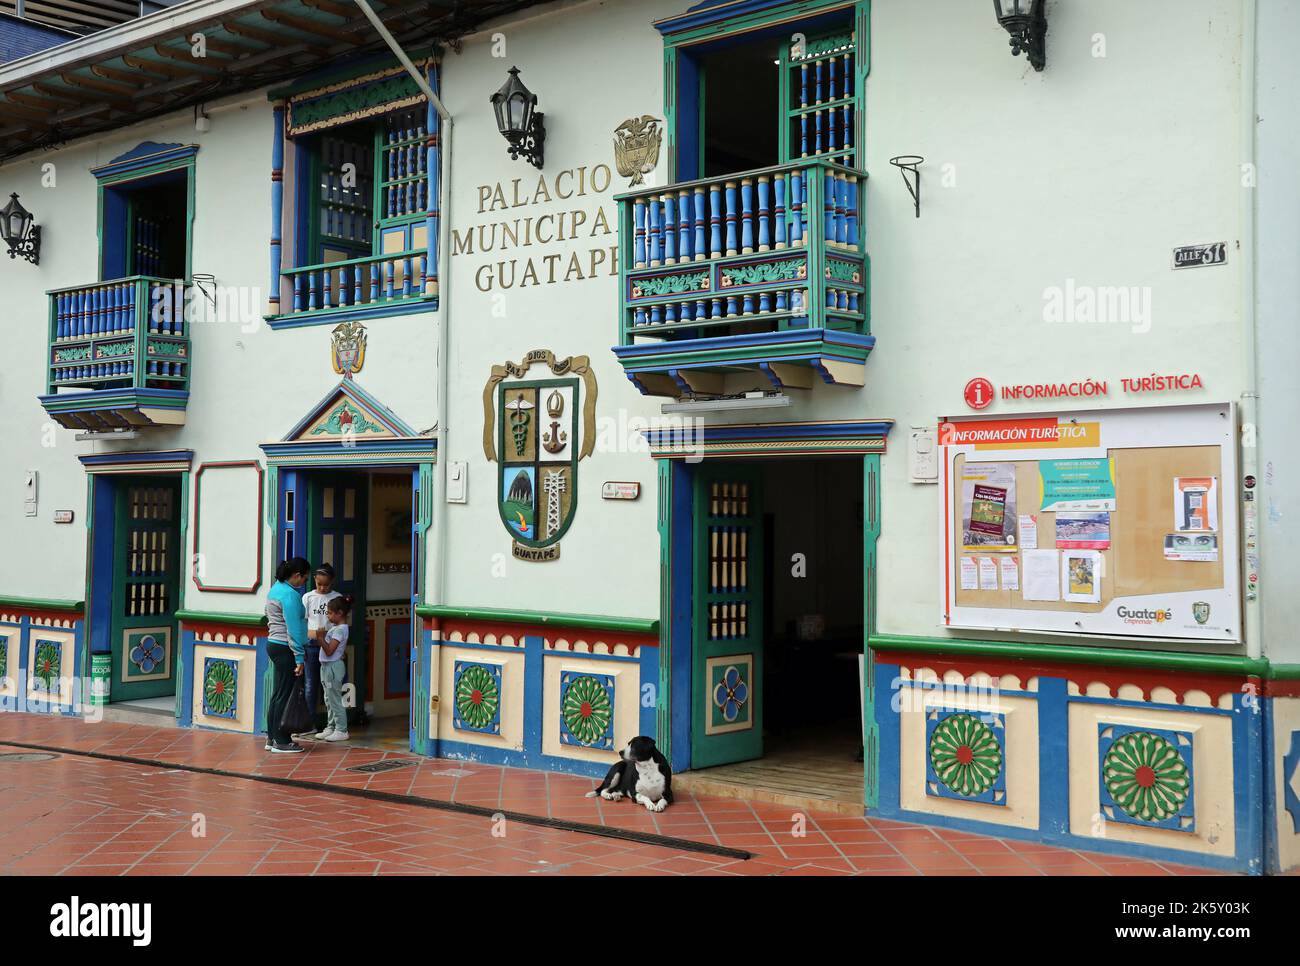 Palacio Municipal Guatape in the Antoquia region of Colombia Stock Photo